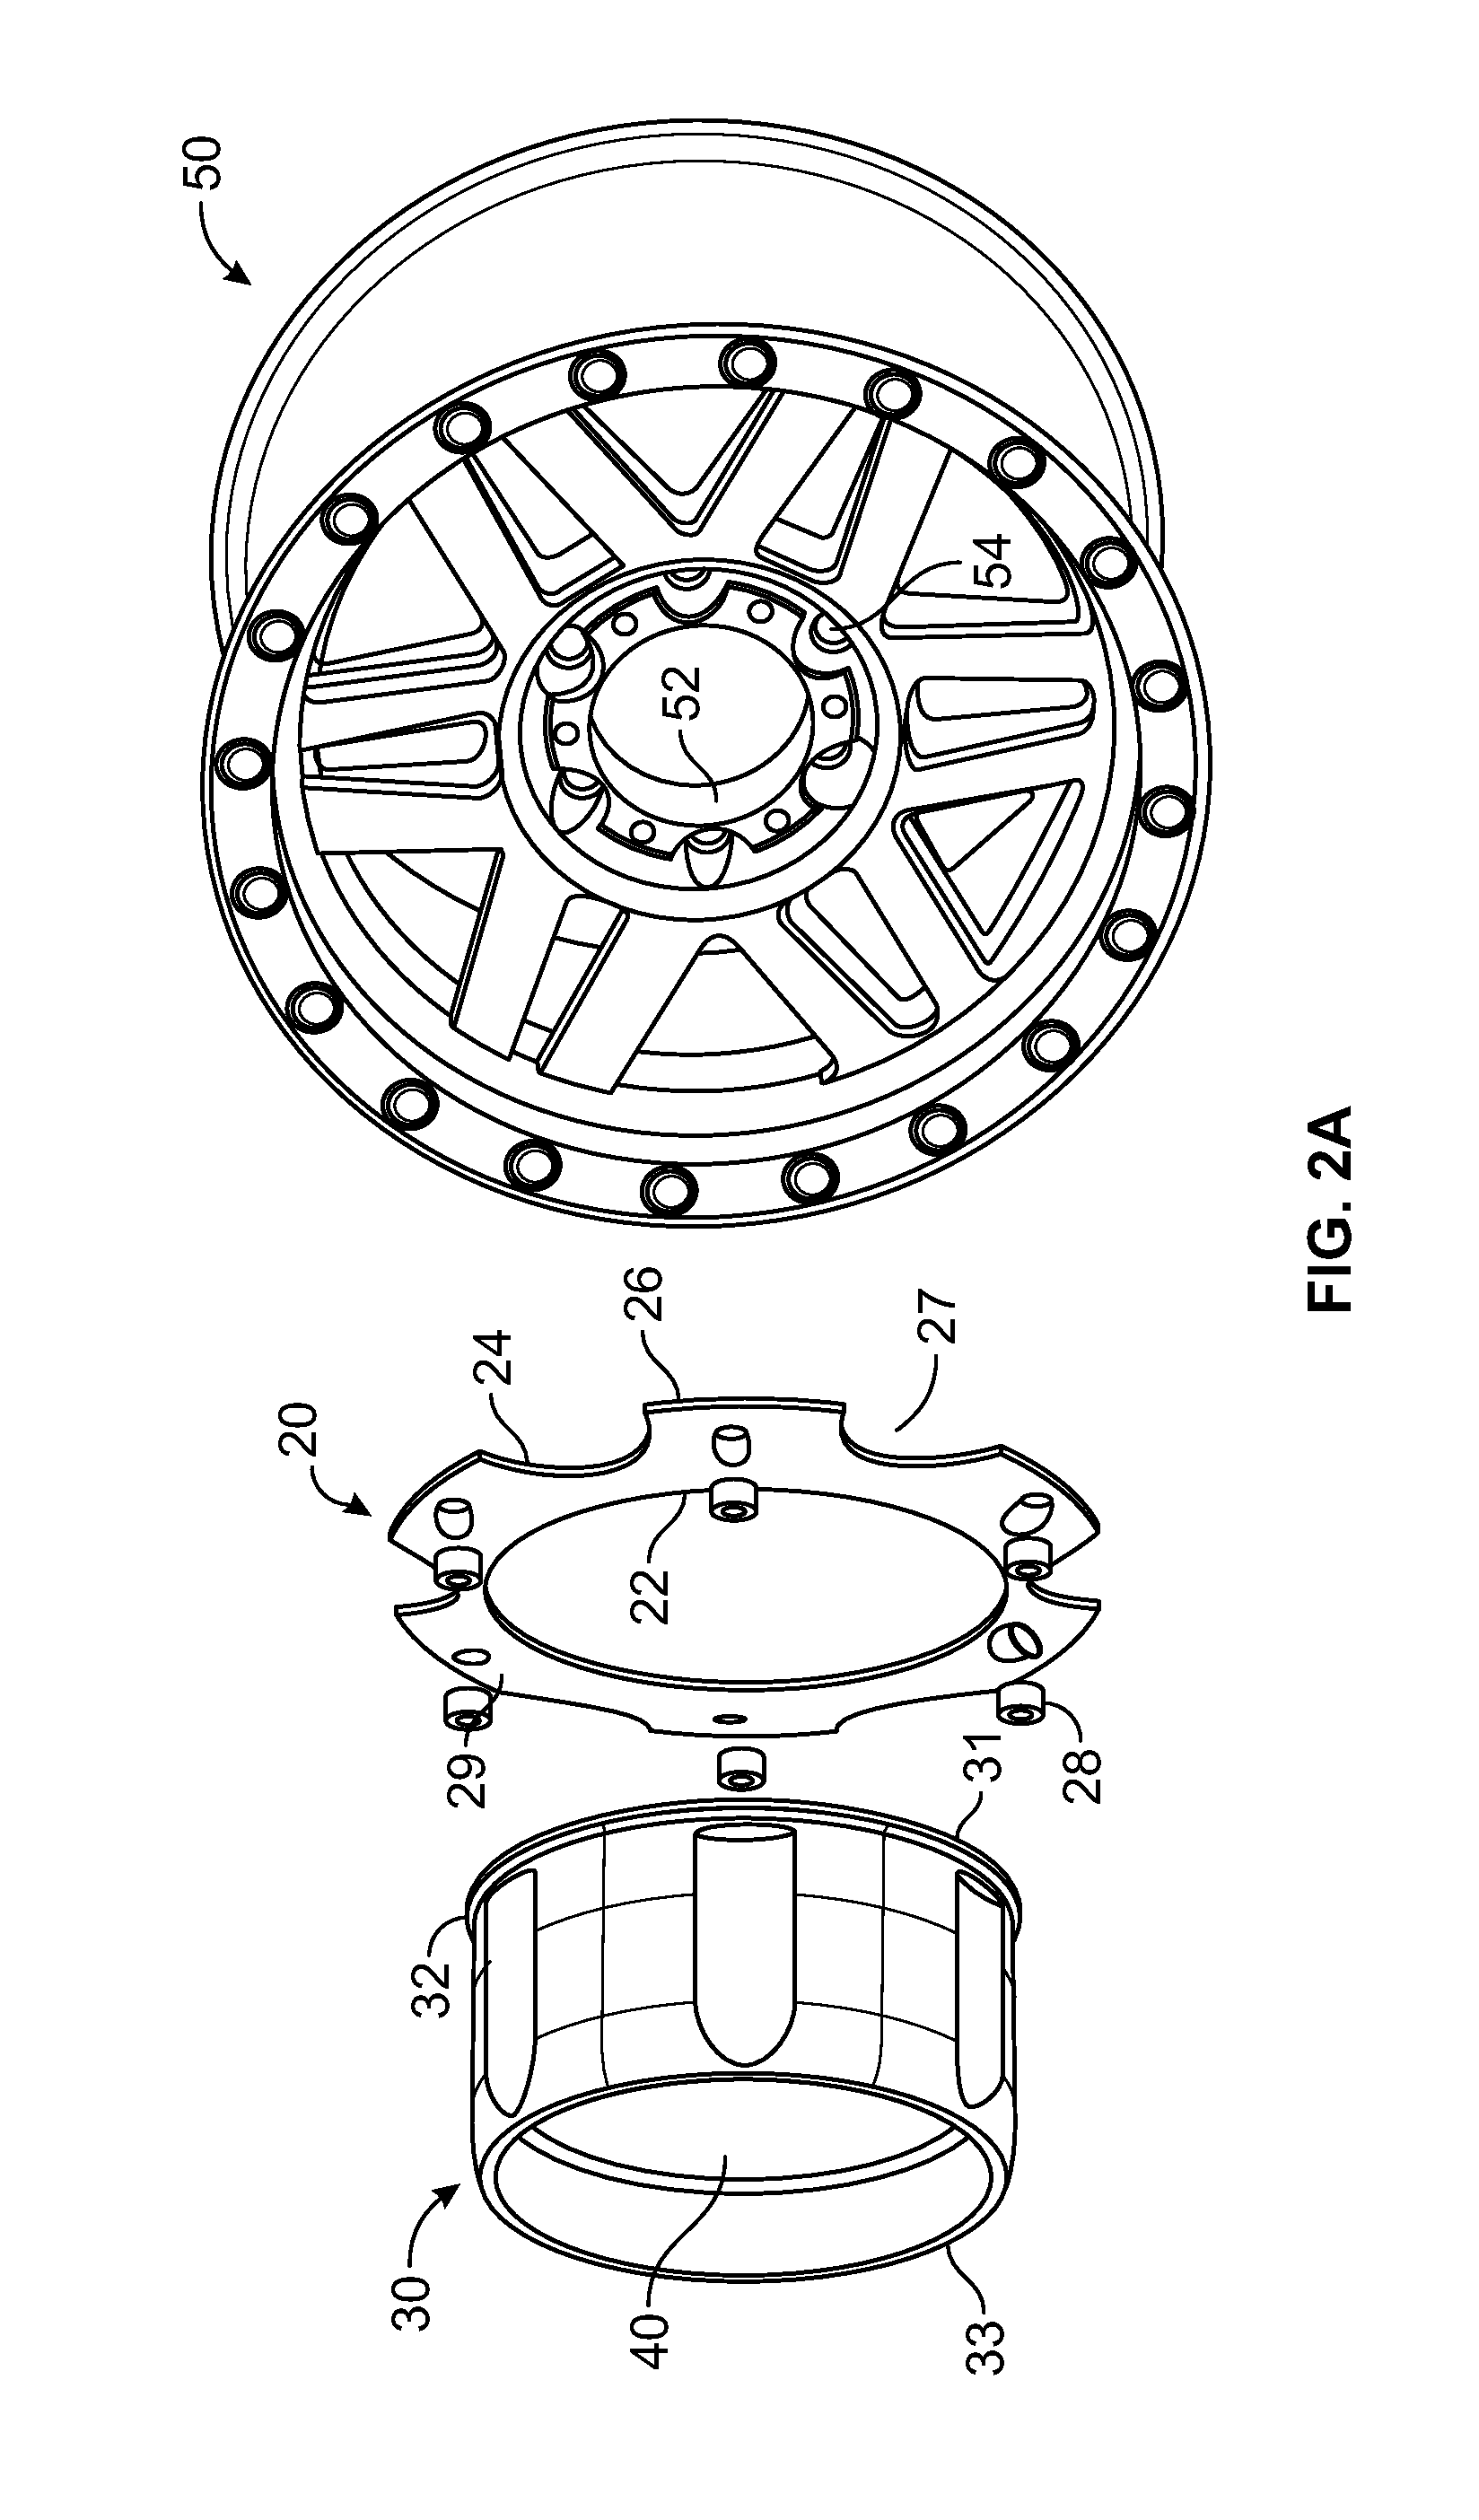 Modular wheel center cap system